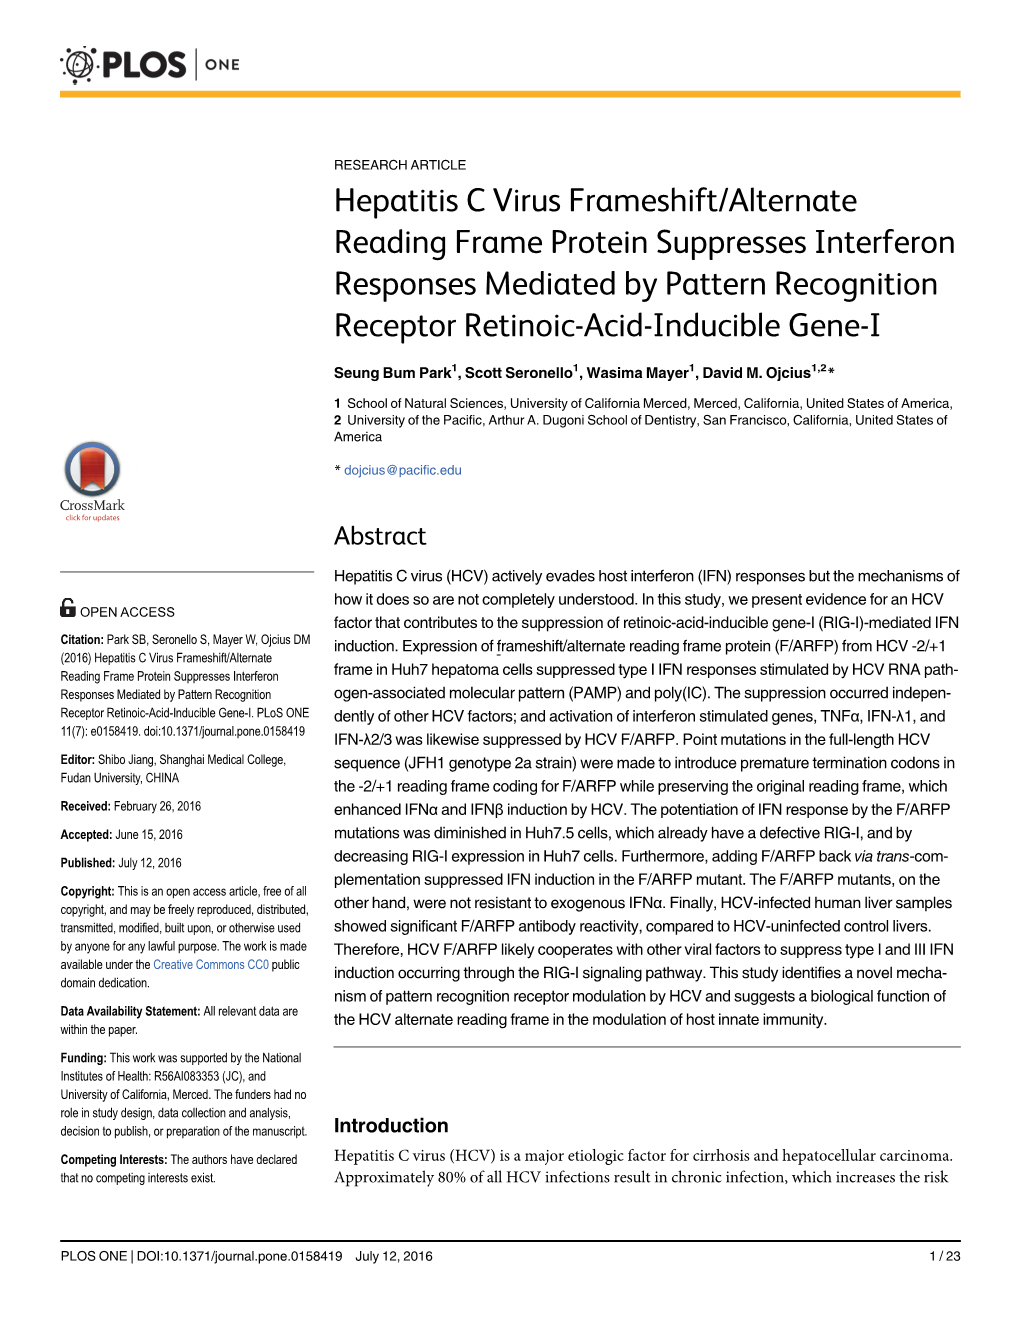 Hepatitis C Virus Frameshift/Alternate Reading Frame Protein Suppresses Interferon Responses Mediated by Pattern Recognition Receptor Retinoic-Acid-Inducible Gene-I